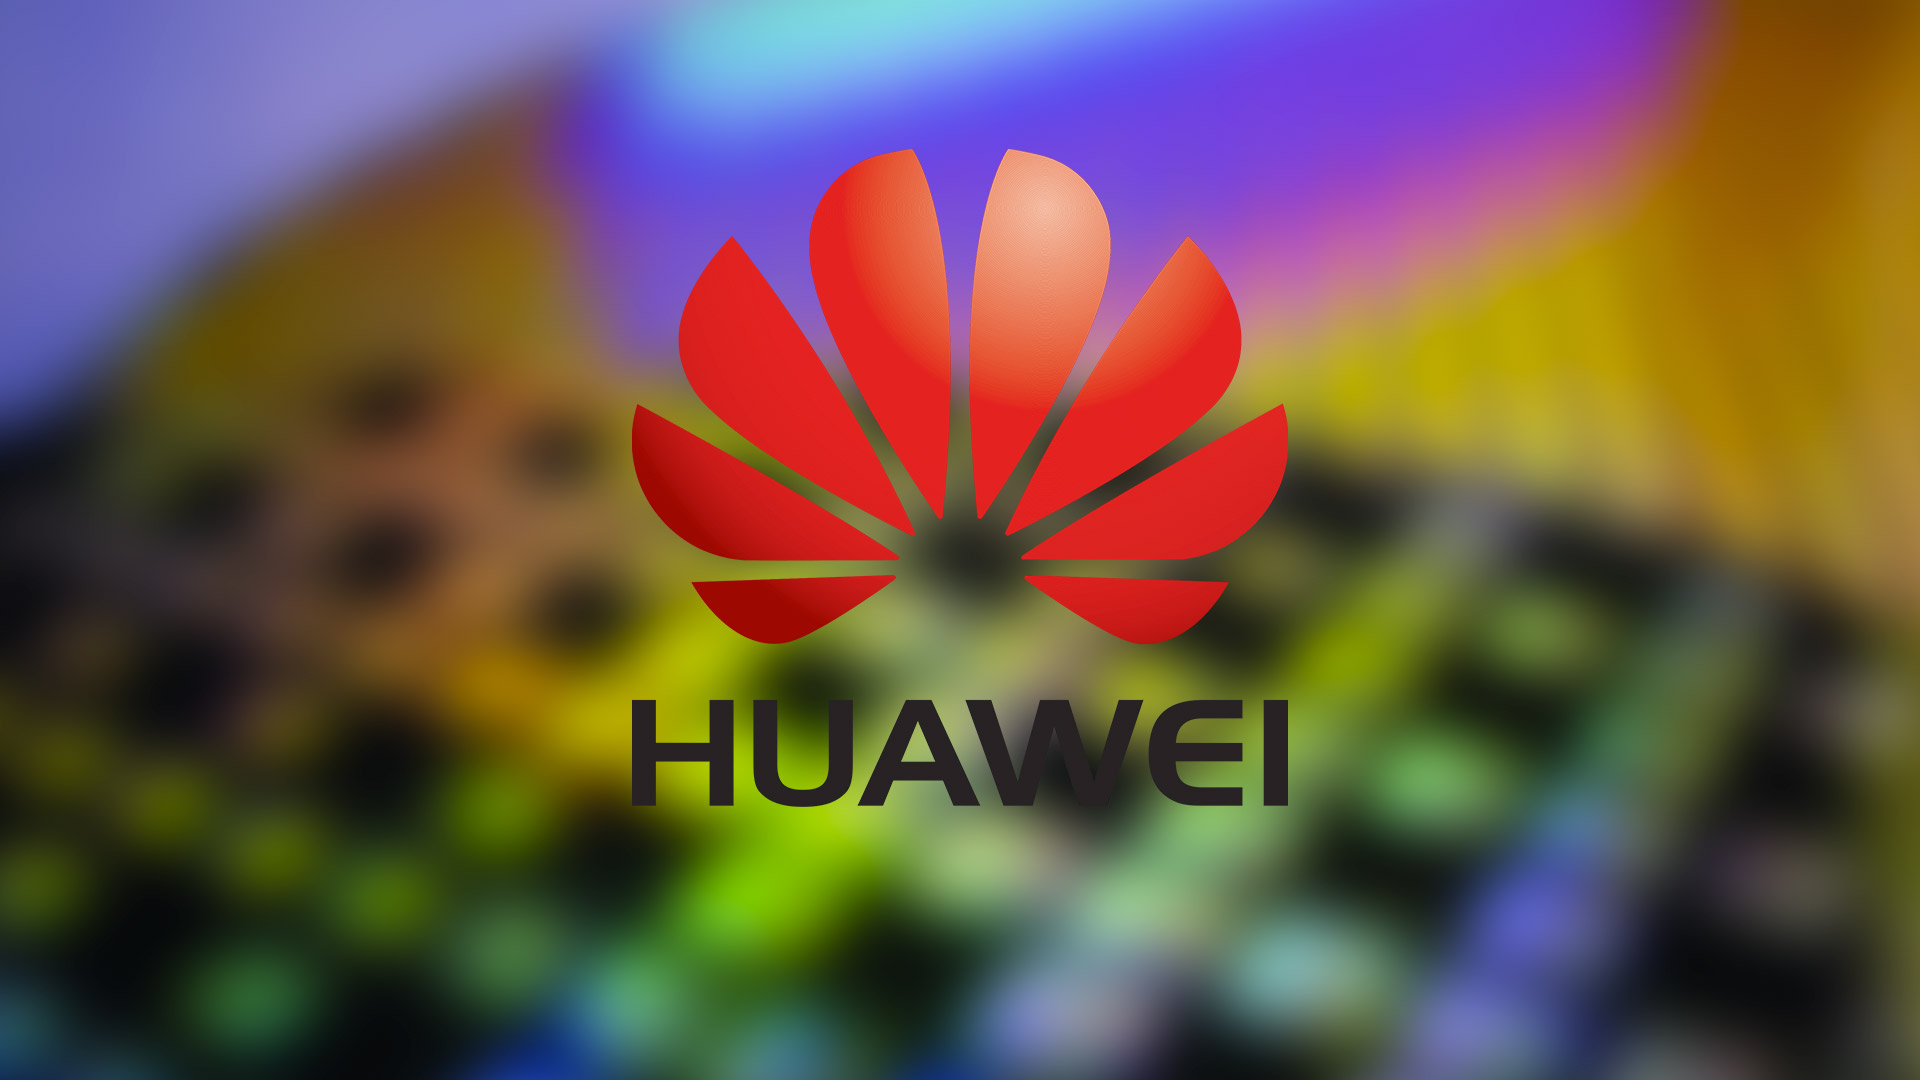 HUAWEI Logo, Chipset manufacturers committee, Business partnerships, Technological advancements, 1920x1080 Full HD Desktop